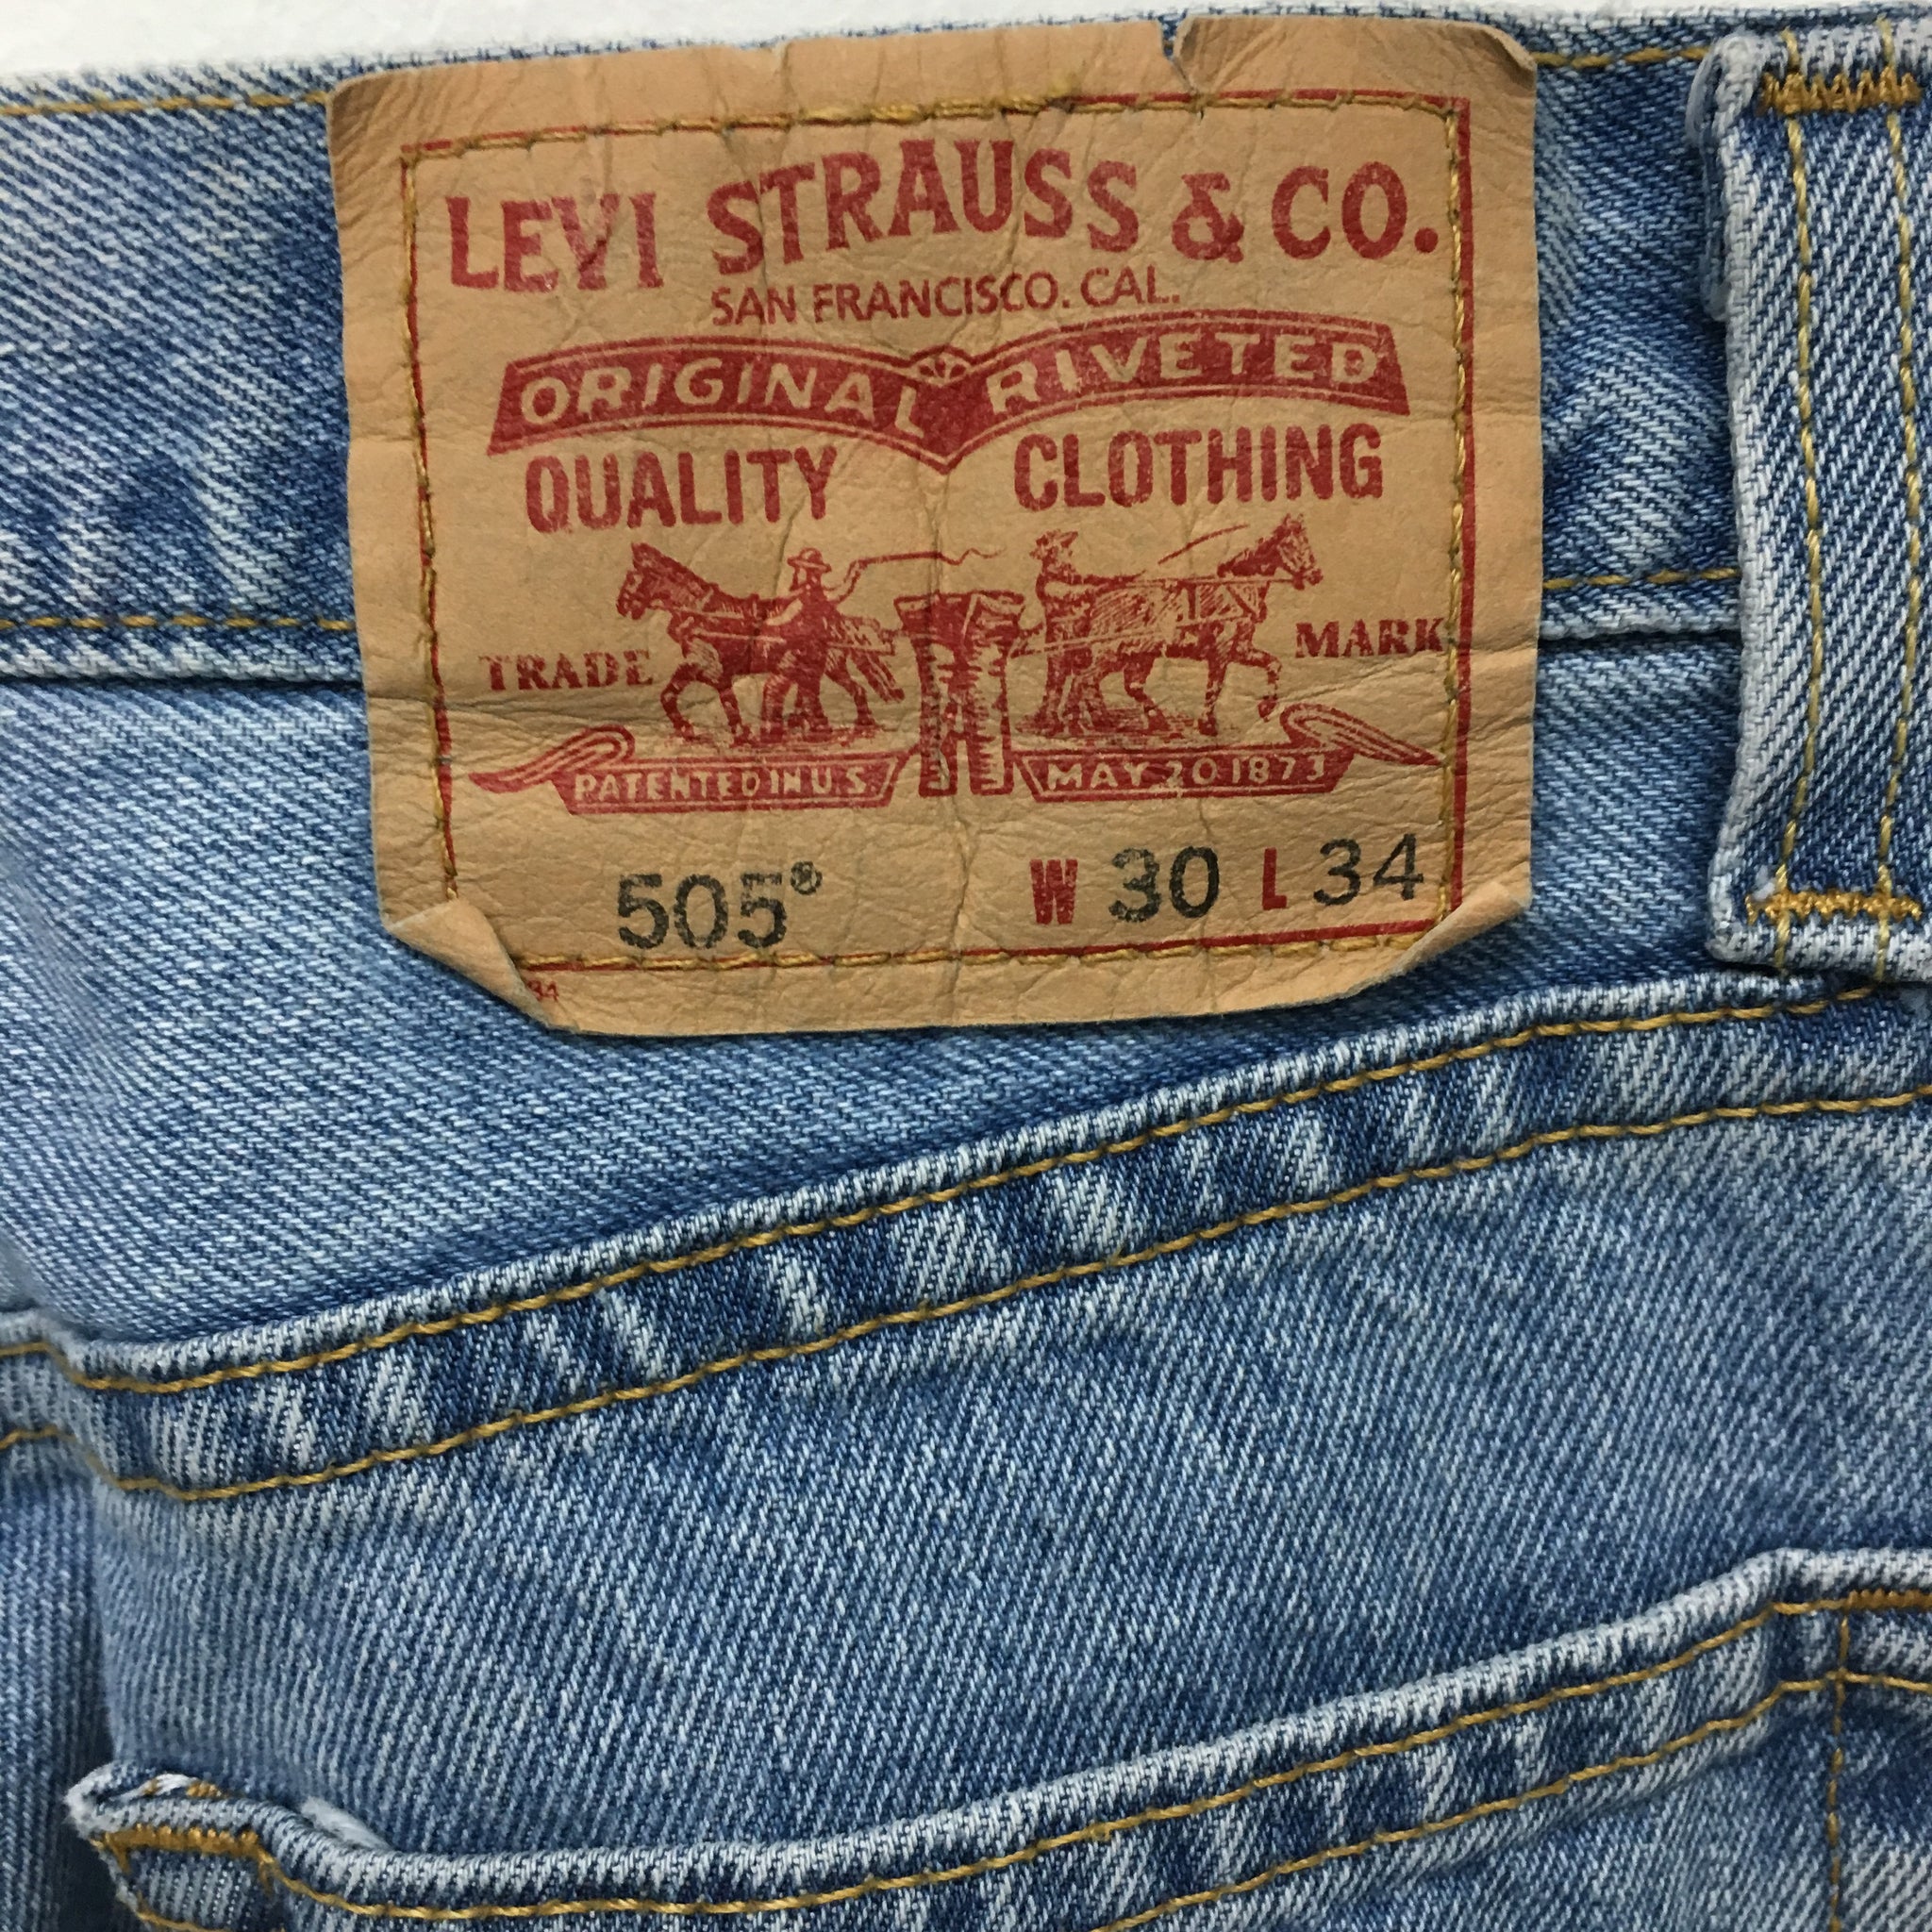 levi's 712 slim jeans white